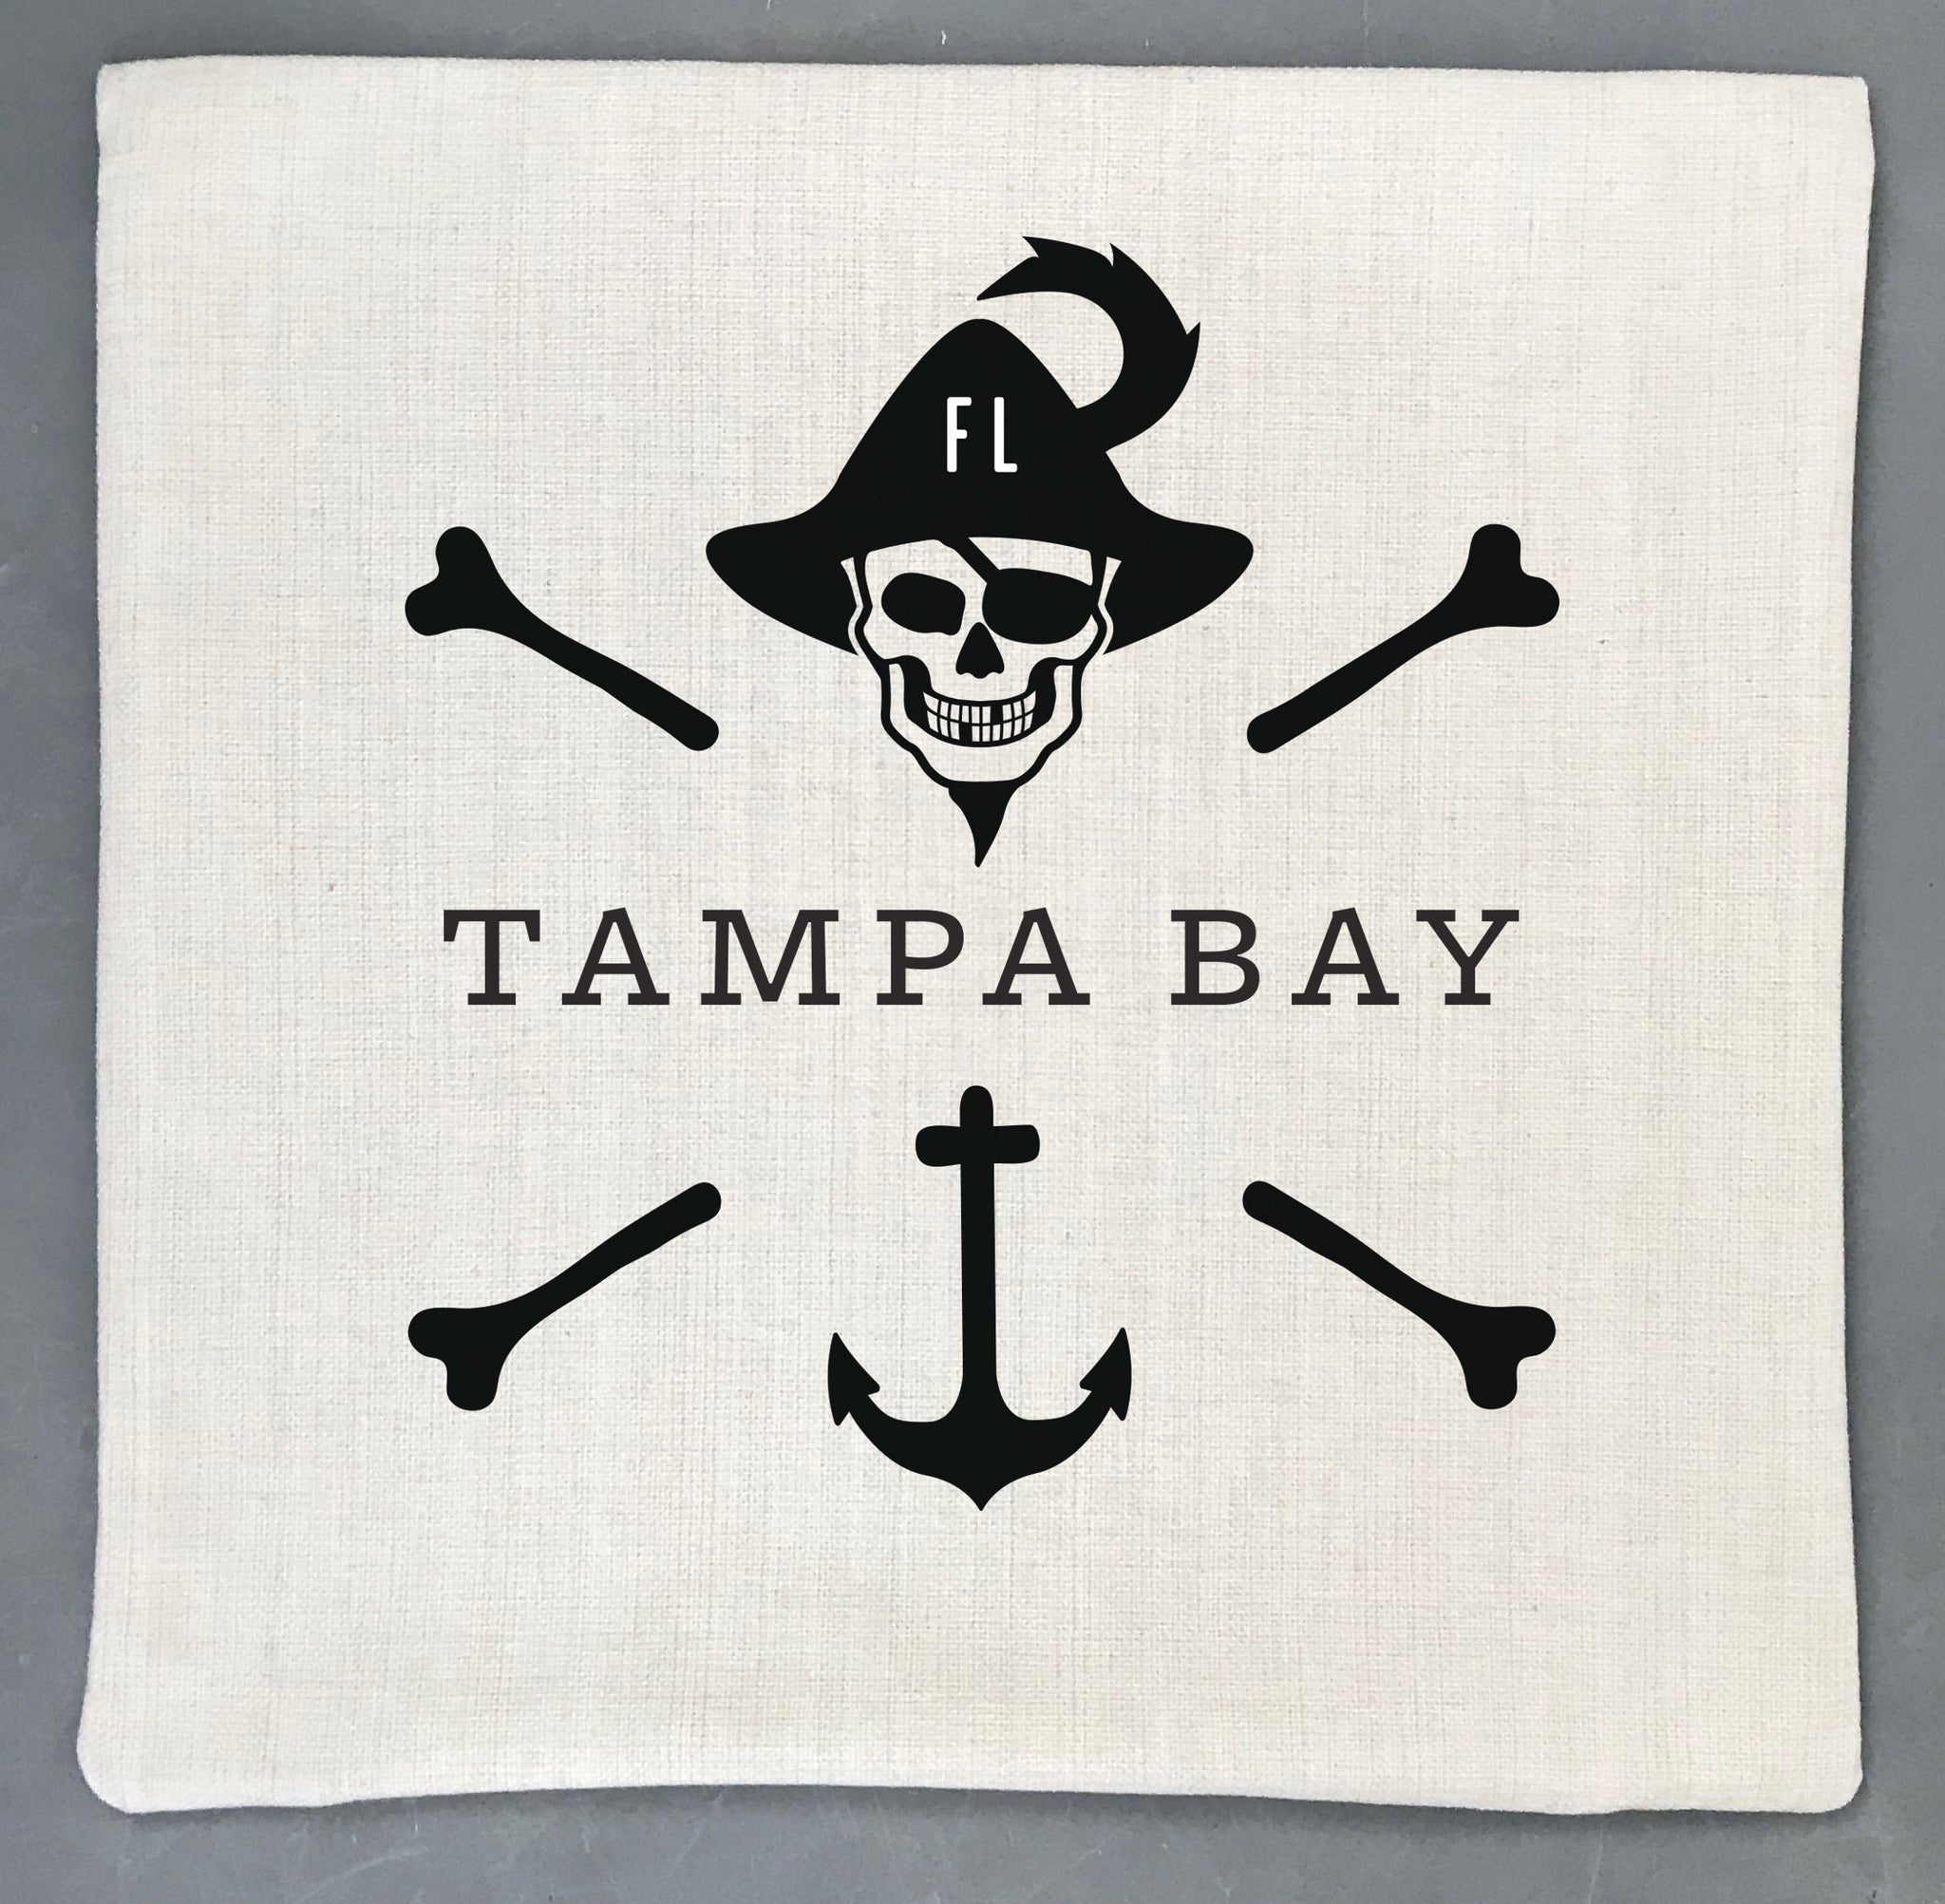 Tampa Bay Pirate Pillow Cover |  Decorative Throw Pillow Cushion Sham